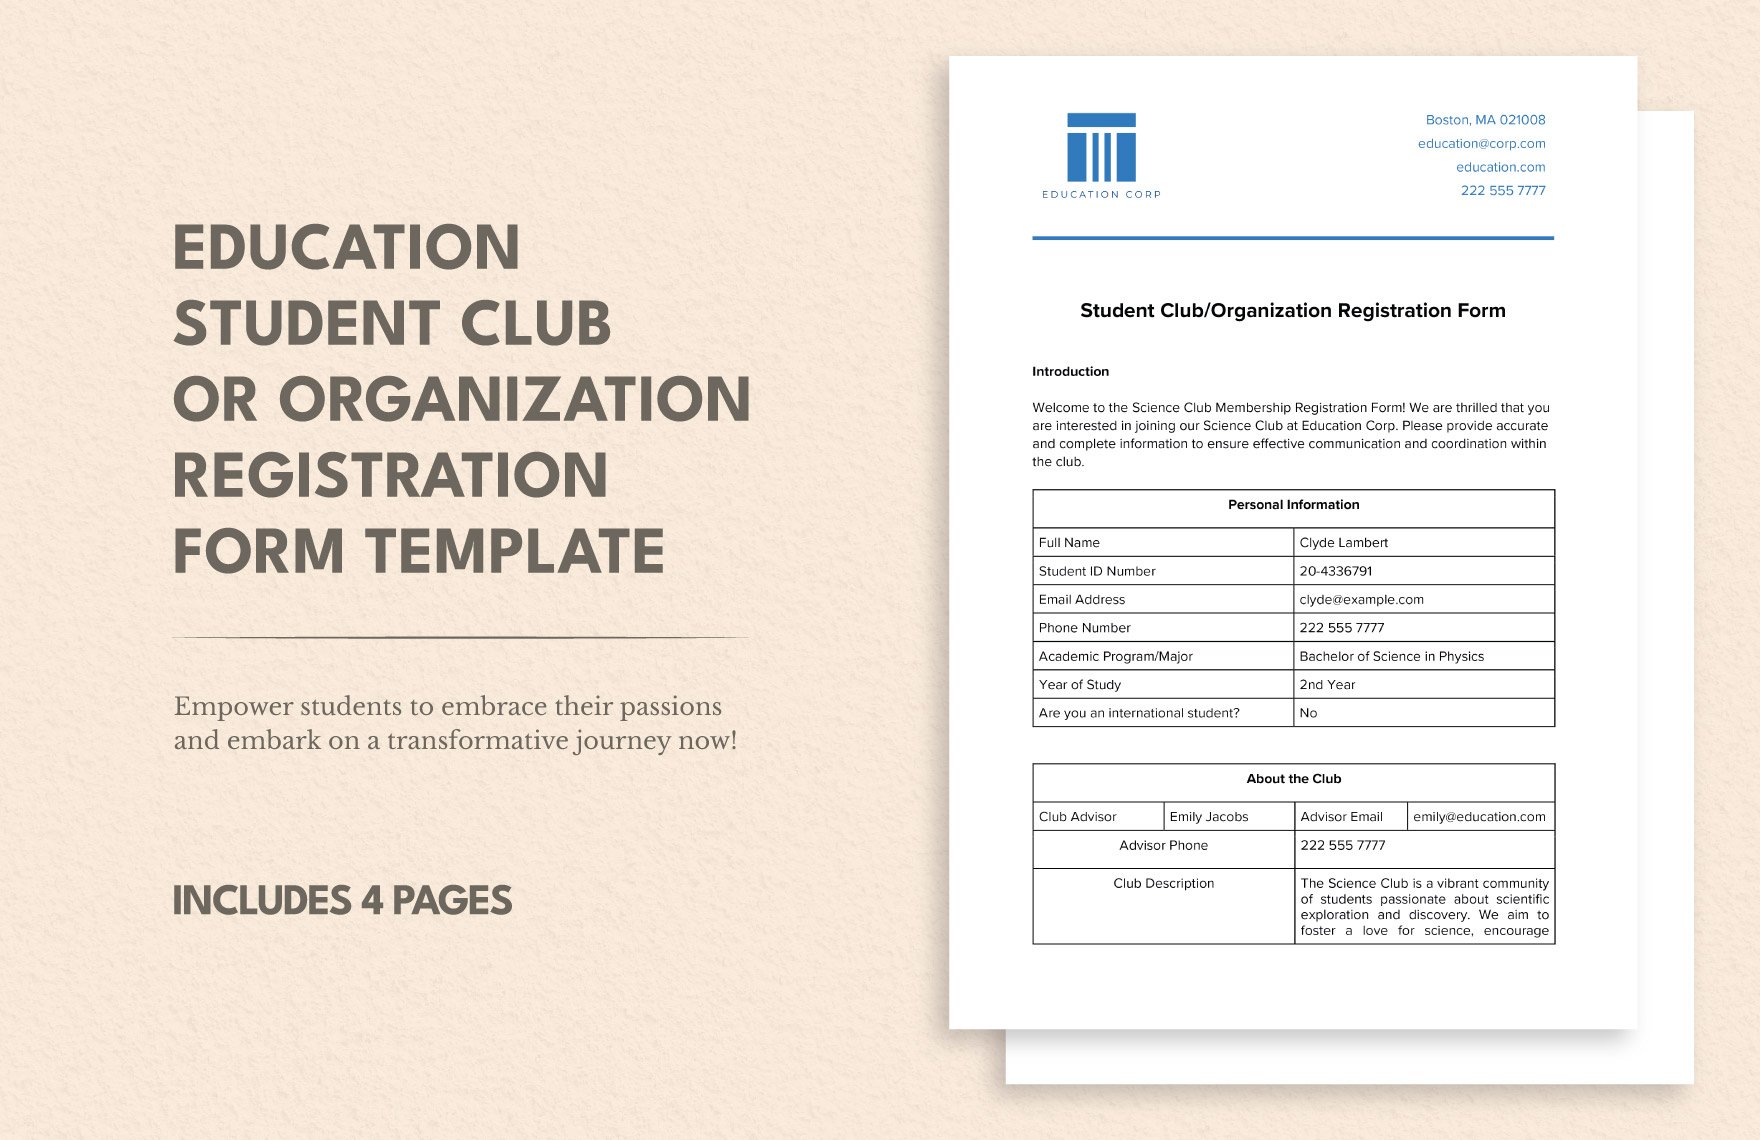 Education Student Club or Organization Registration Form Template